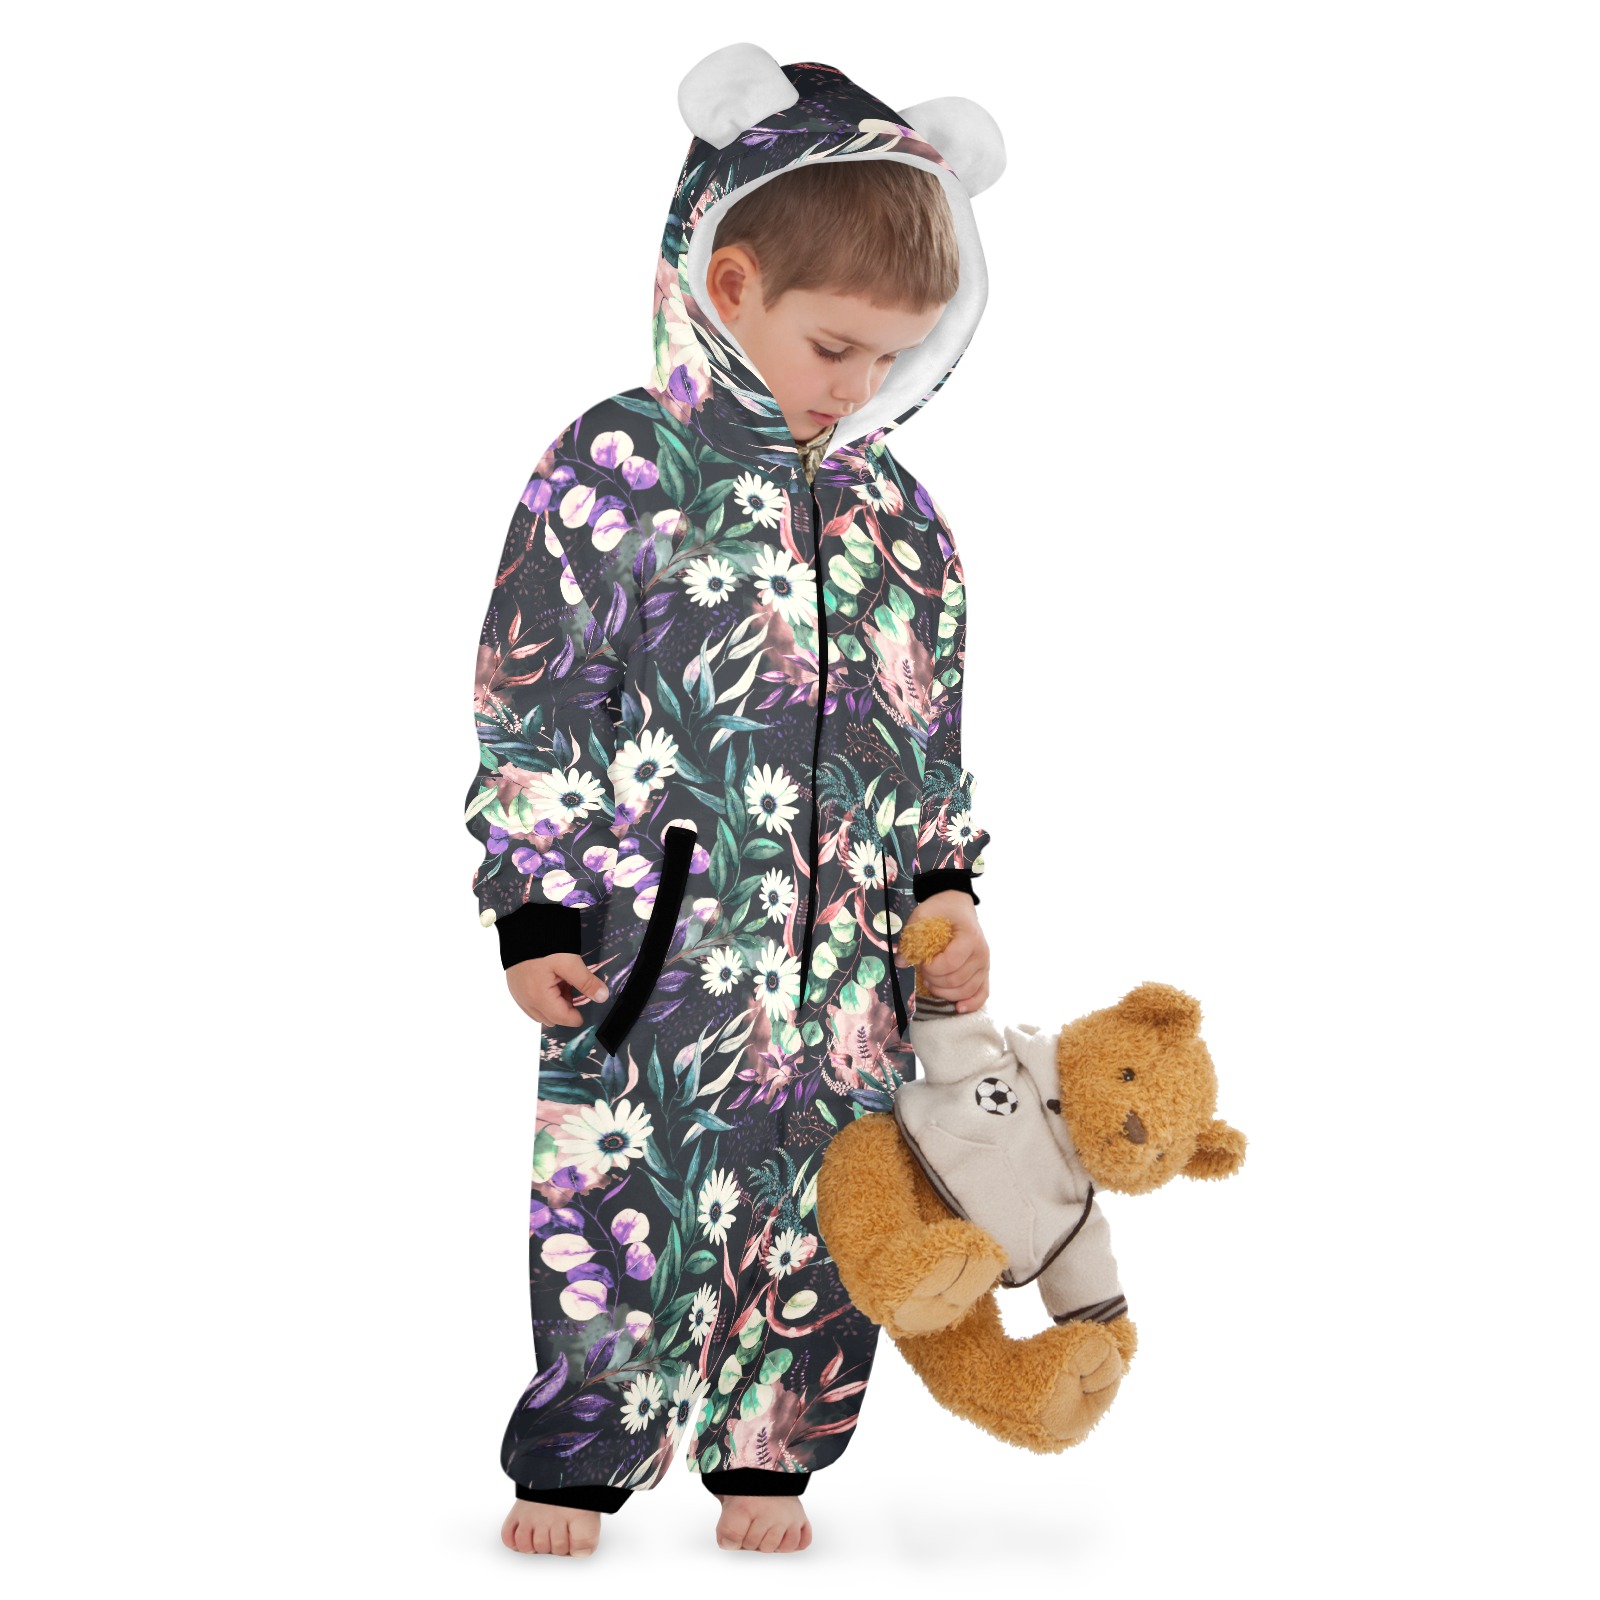 Vintage dark fantasy bloom 20G One-Piece Zip up Hooded Pajamas for Little Kids